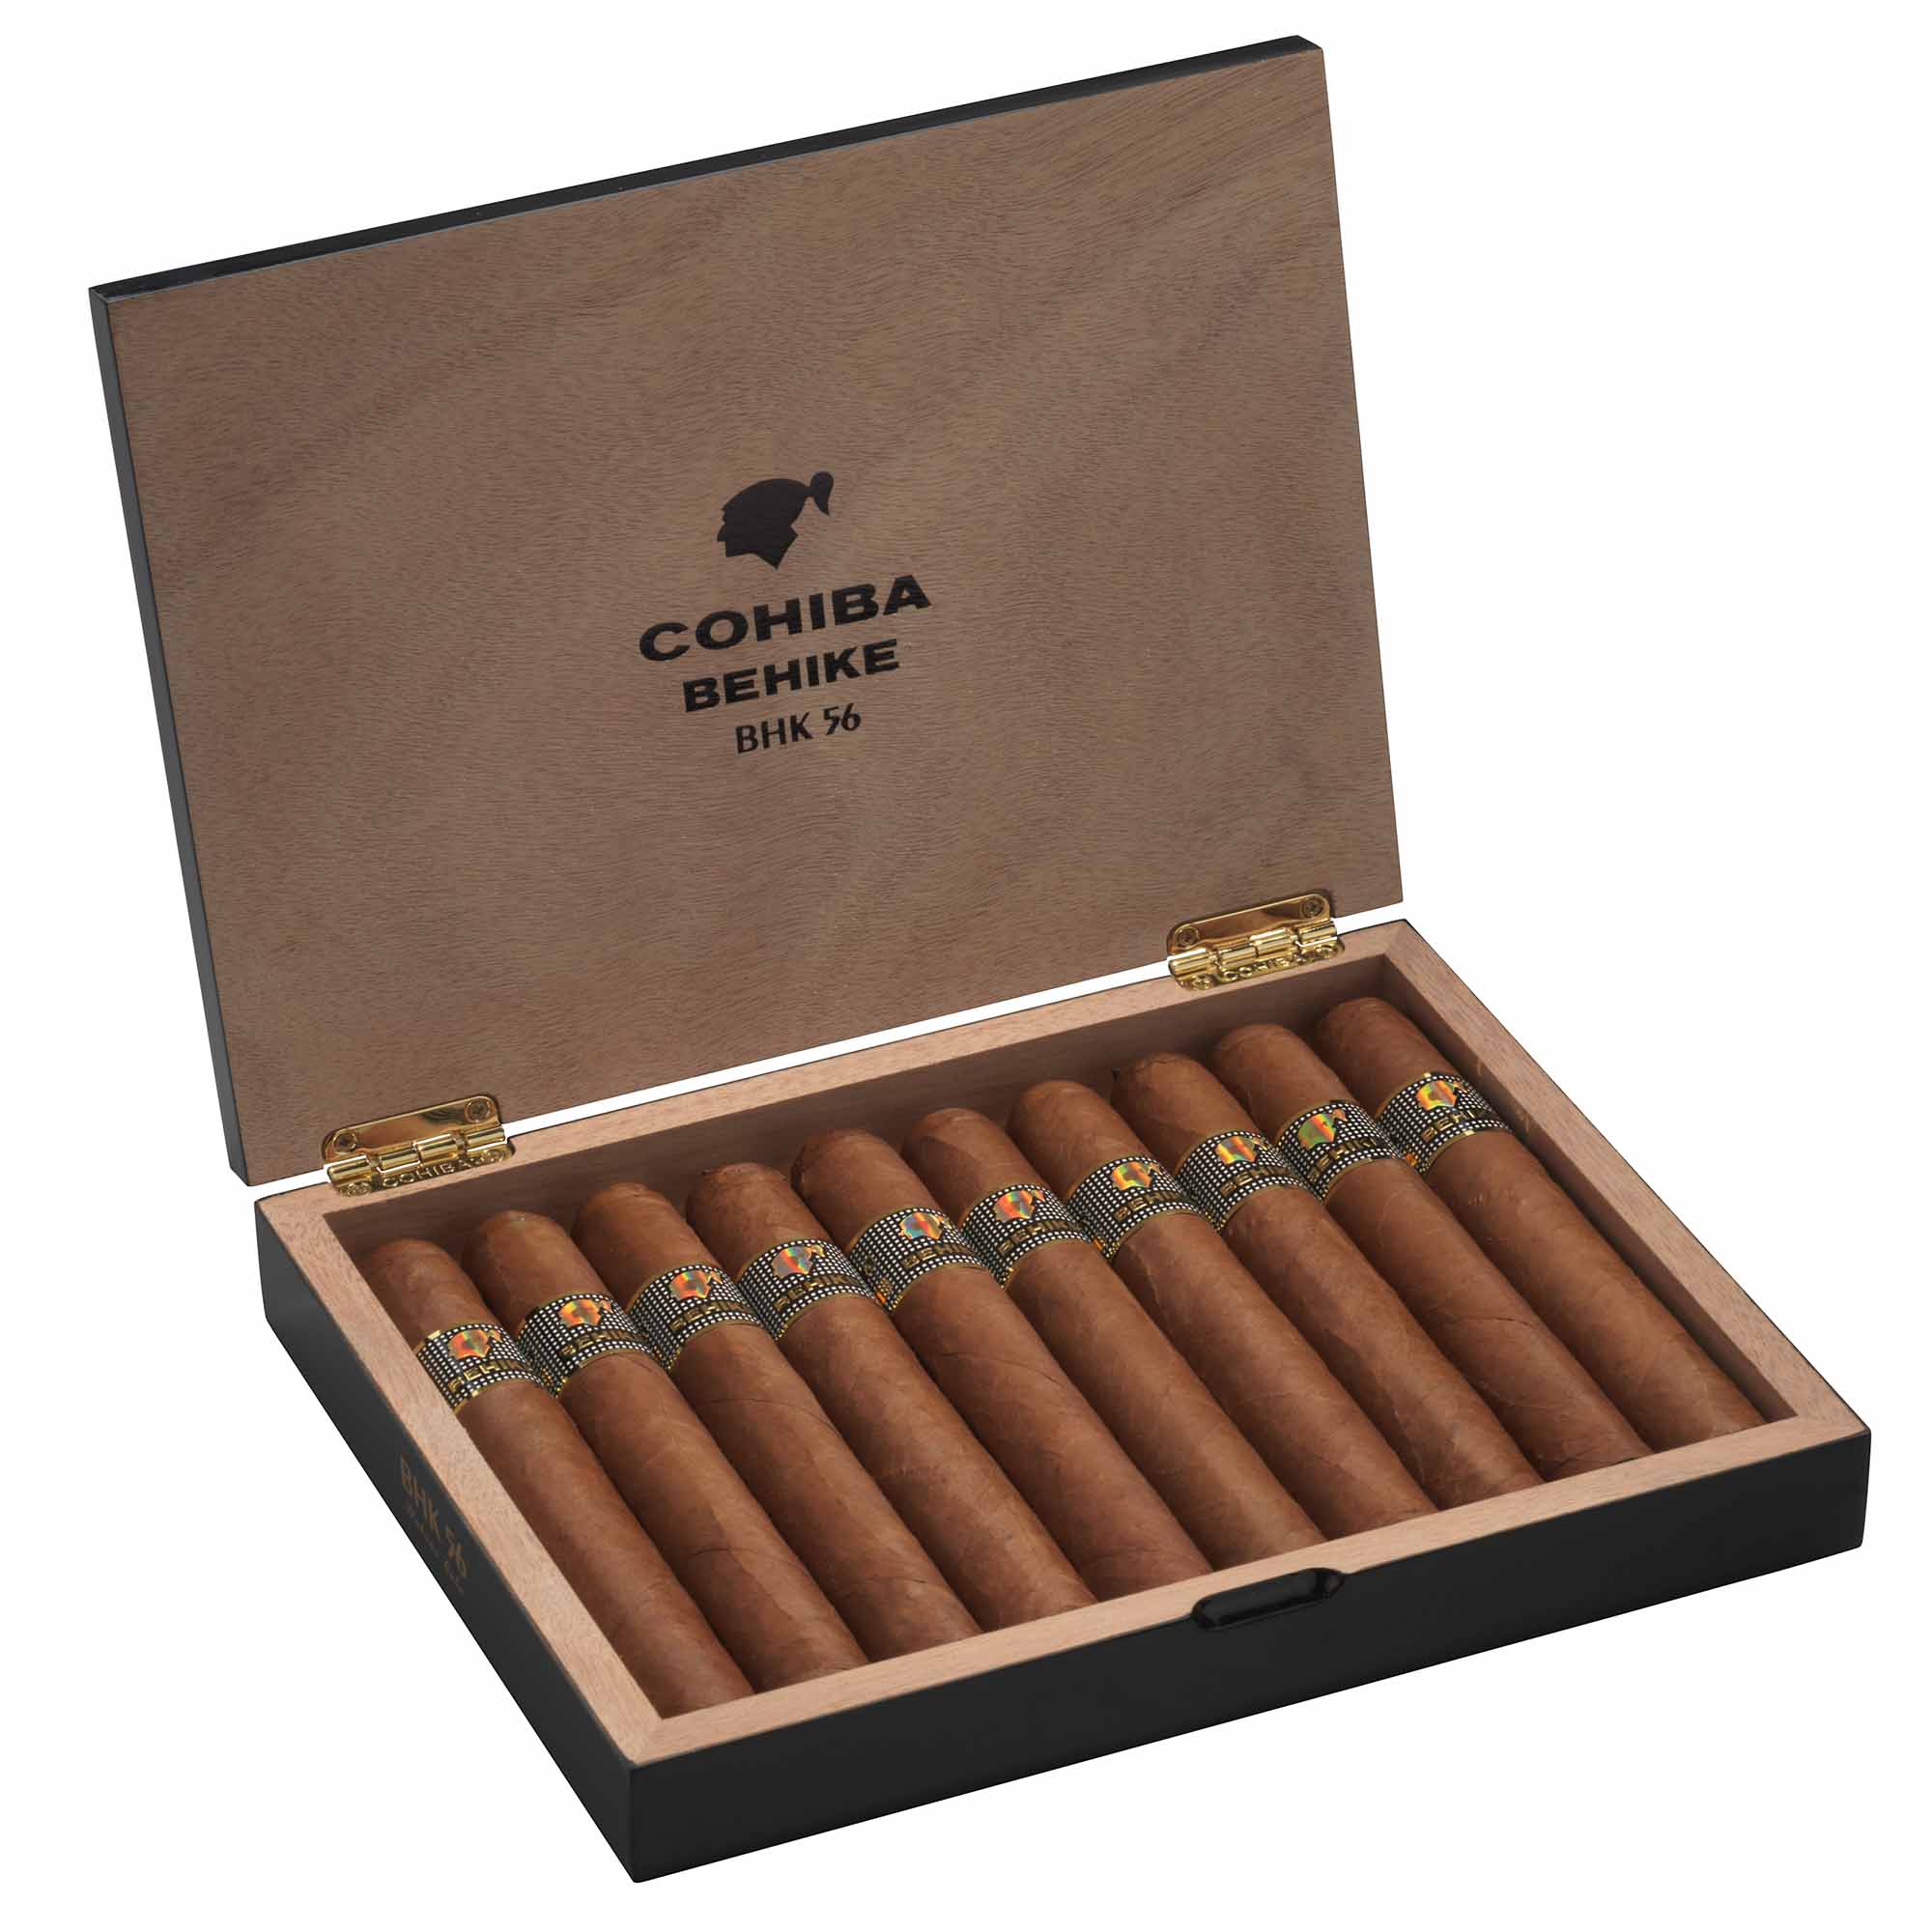 Cohiba Behike 56 Zigarre im Laguito No6 Format 10er Box geöffnet